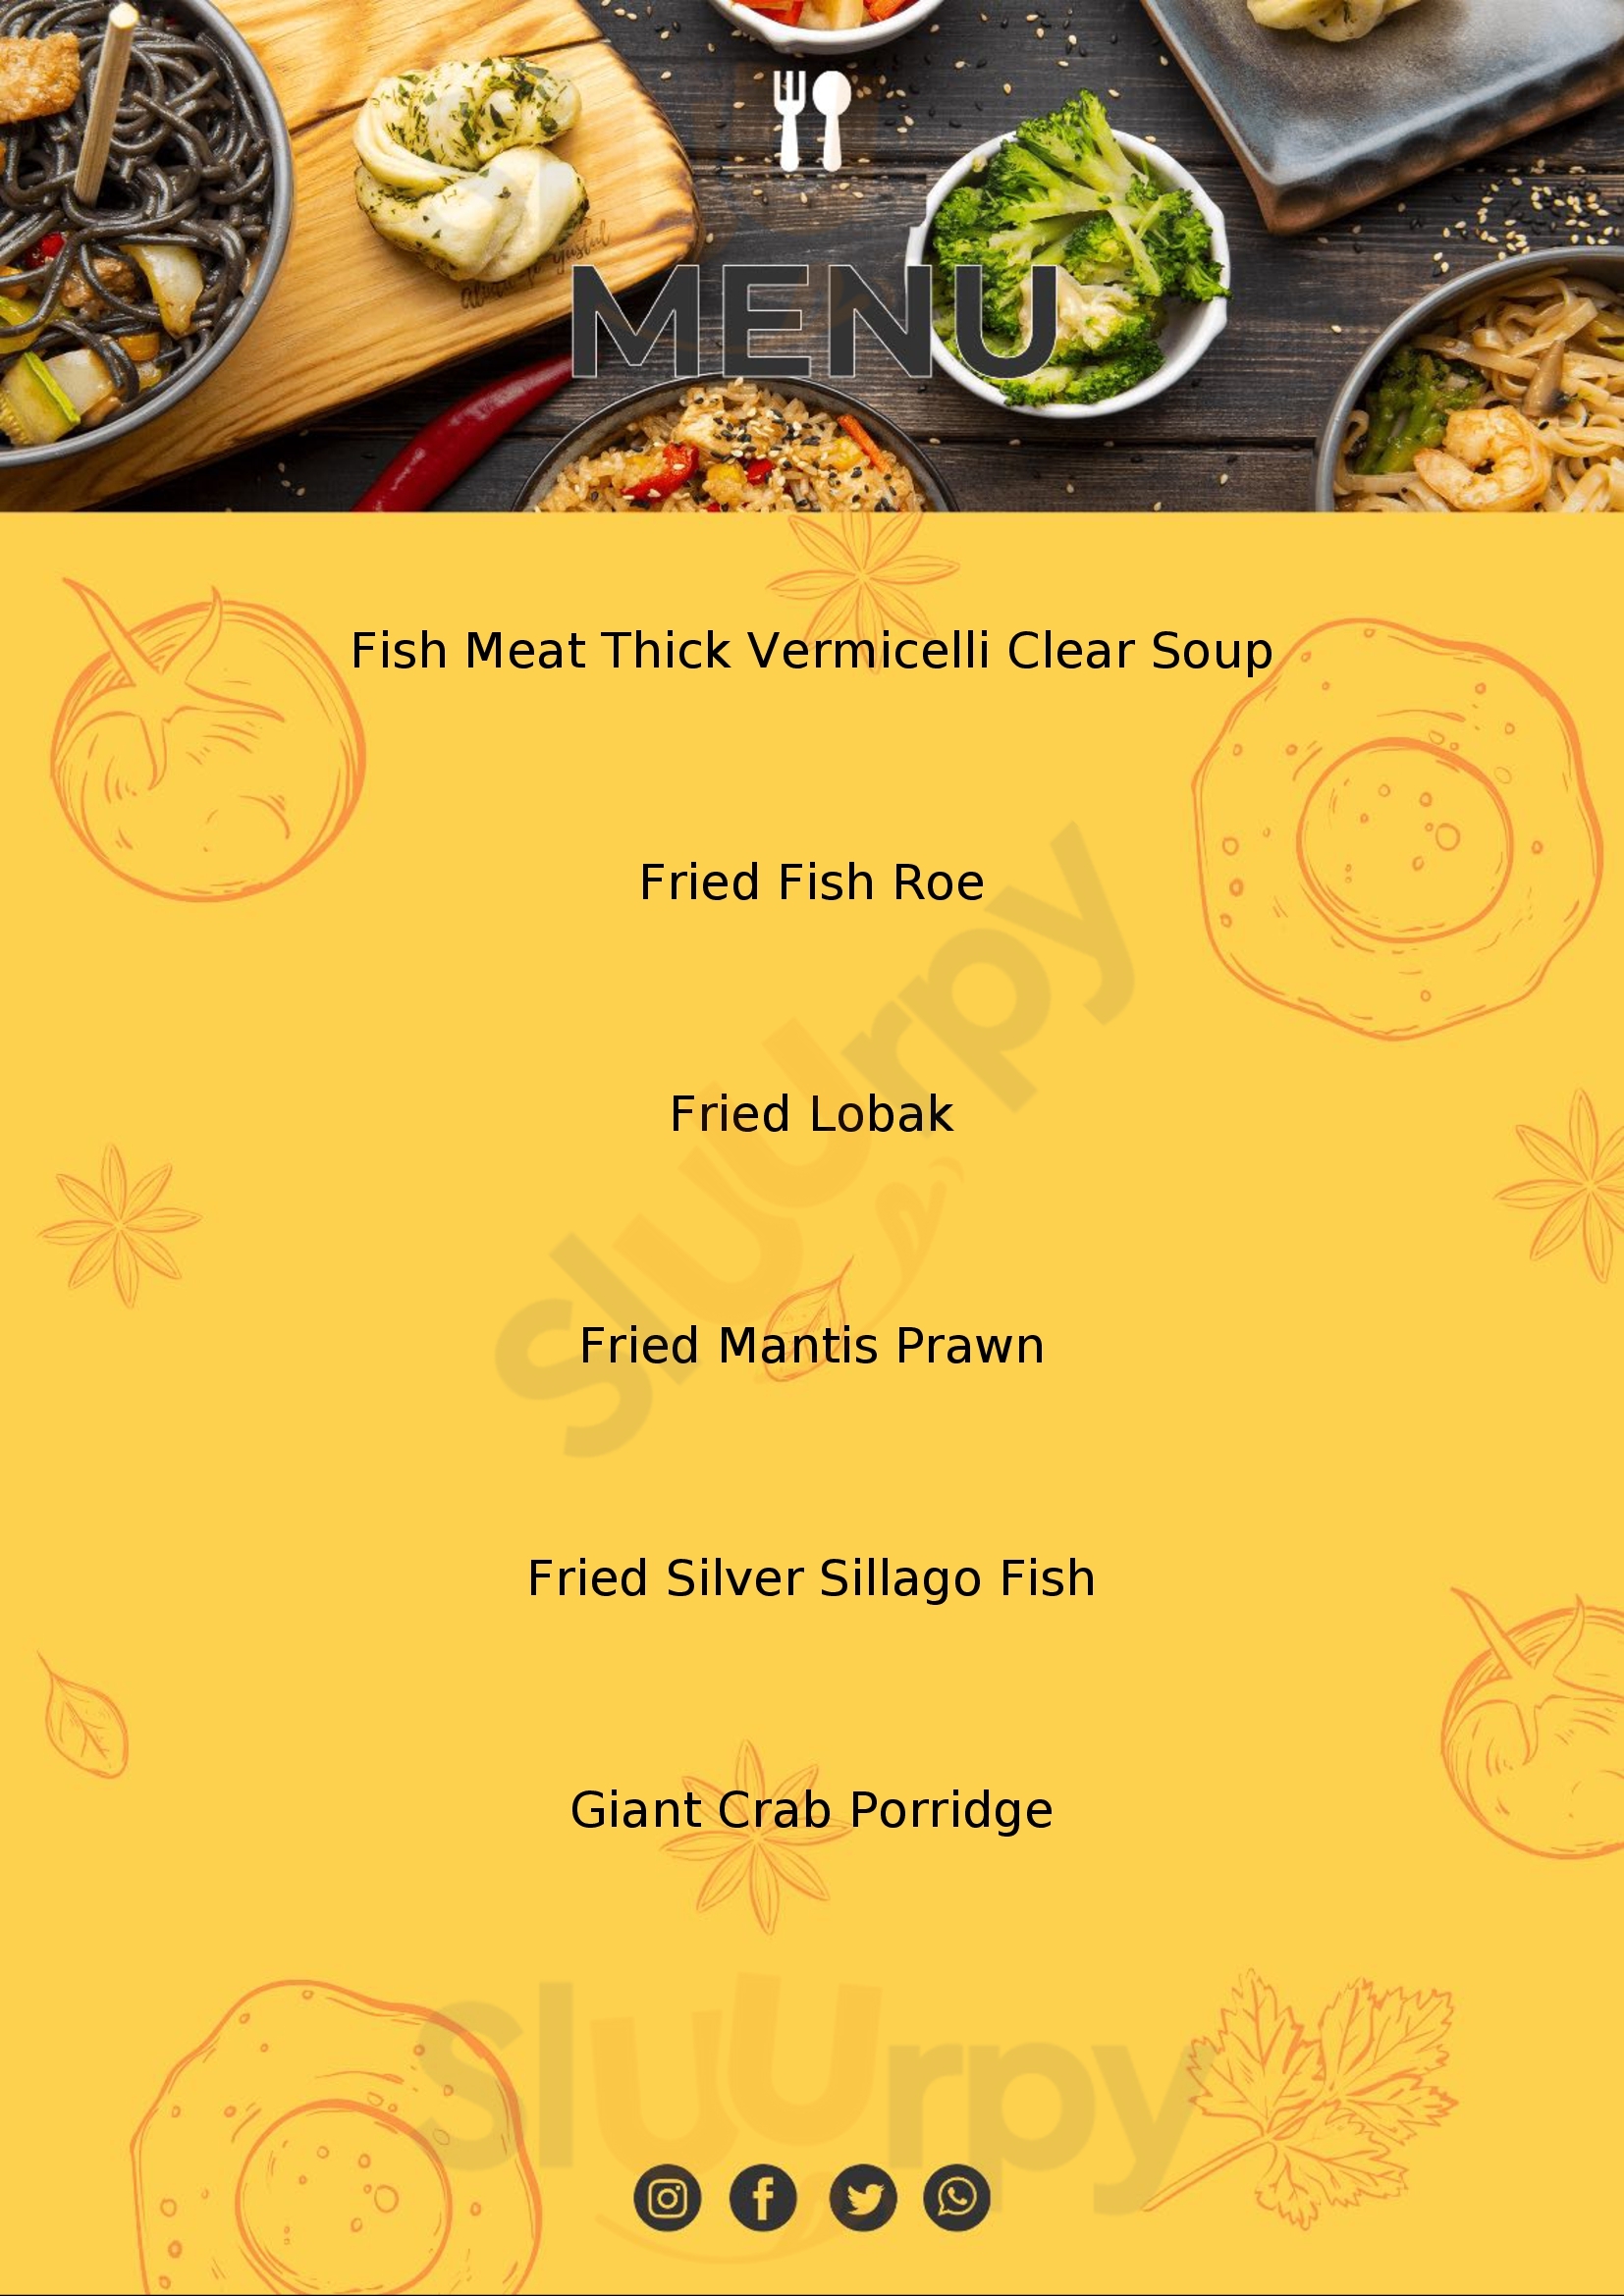 Ka Bee Cafe - Fresh Seafood Noodles George Town Menu - 1